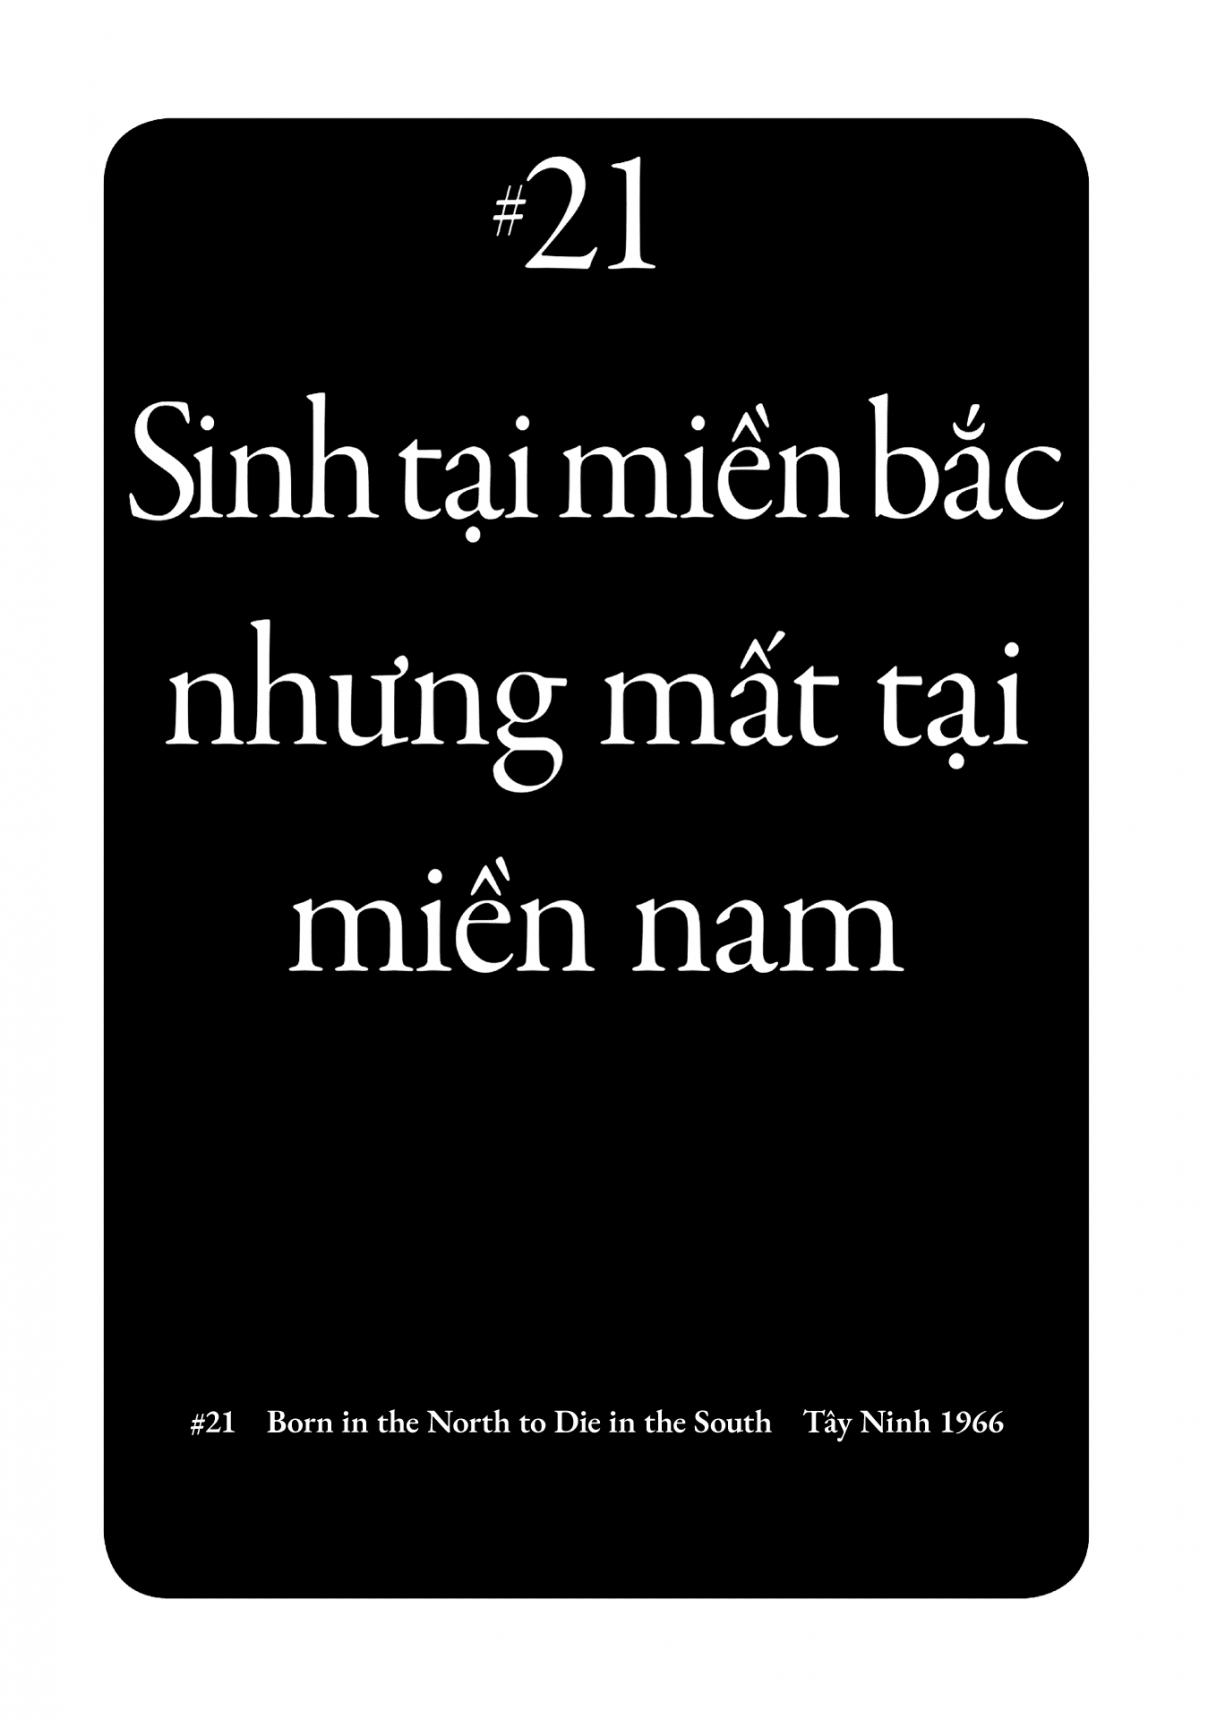 Dien Bien Phu Vol. 4 Ch. 21 Born in the North to Die in the South